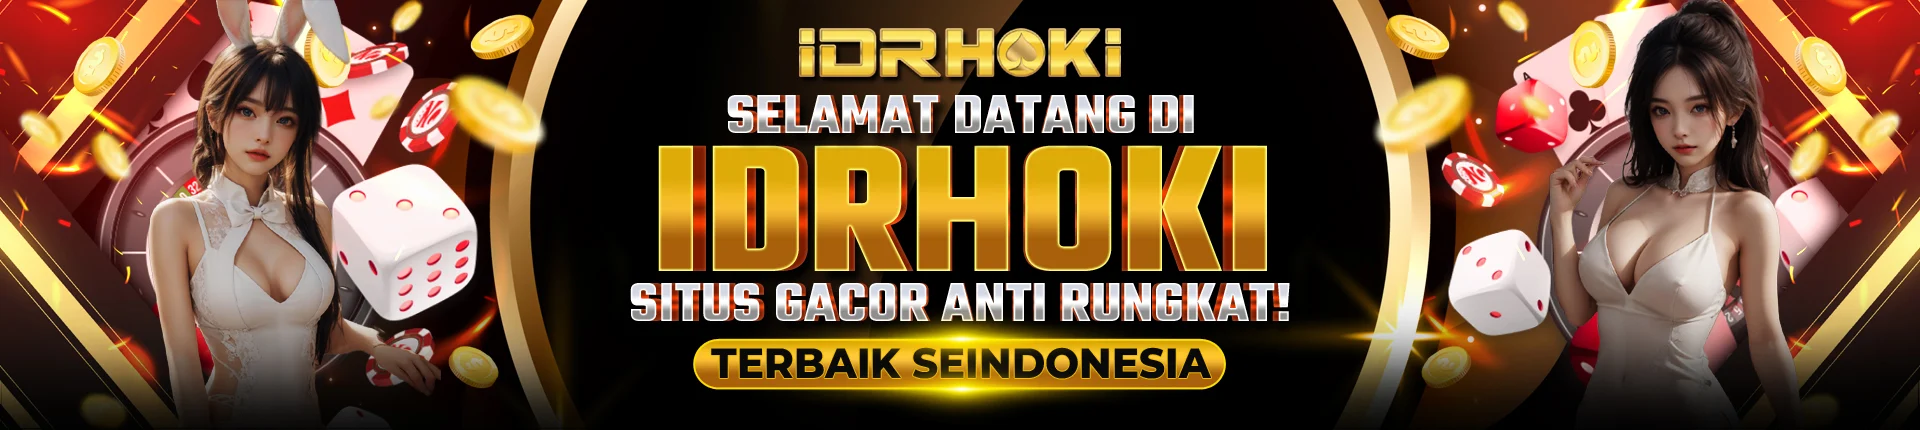 WELCOME TO Idrhoki